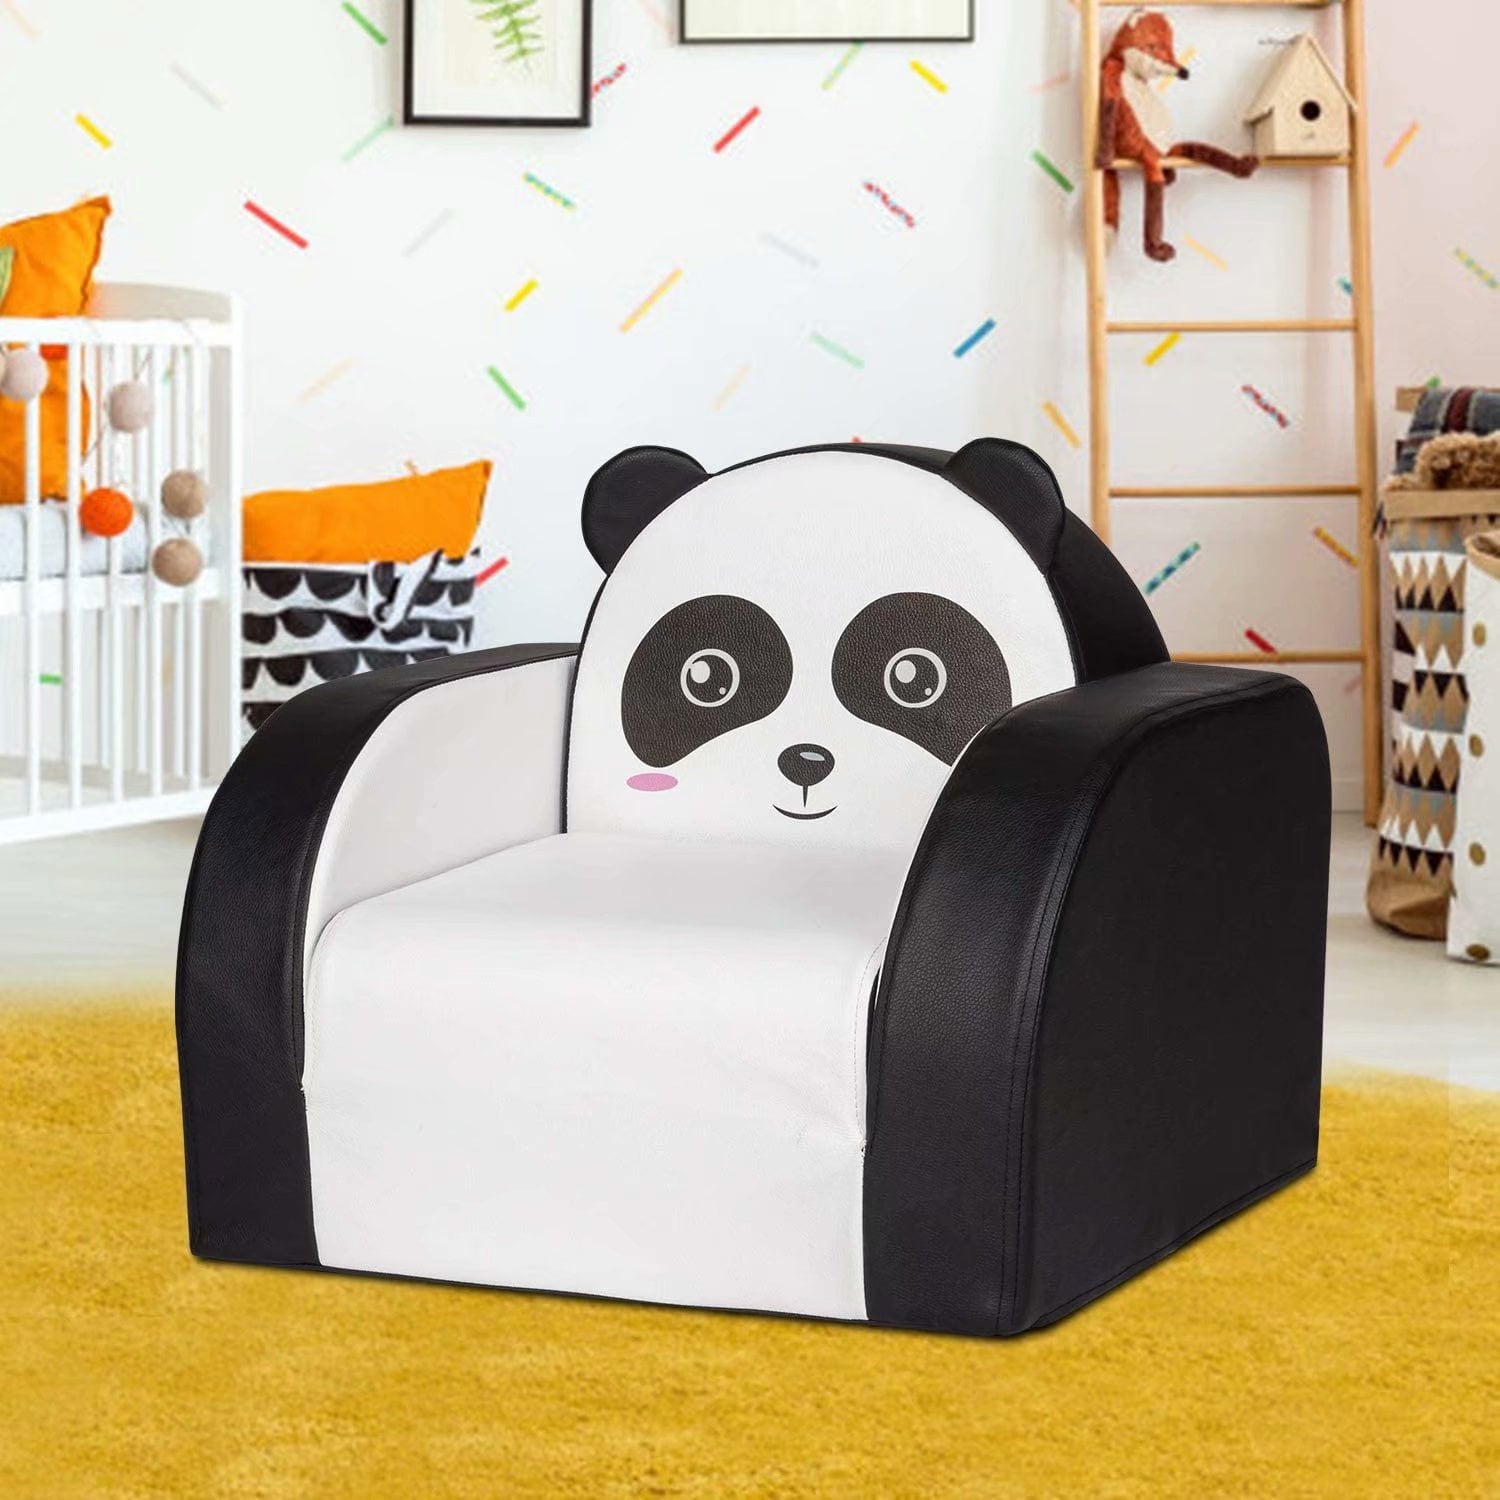 armchair for children's room